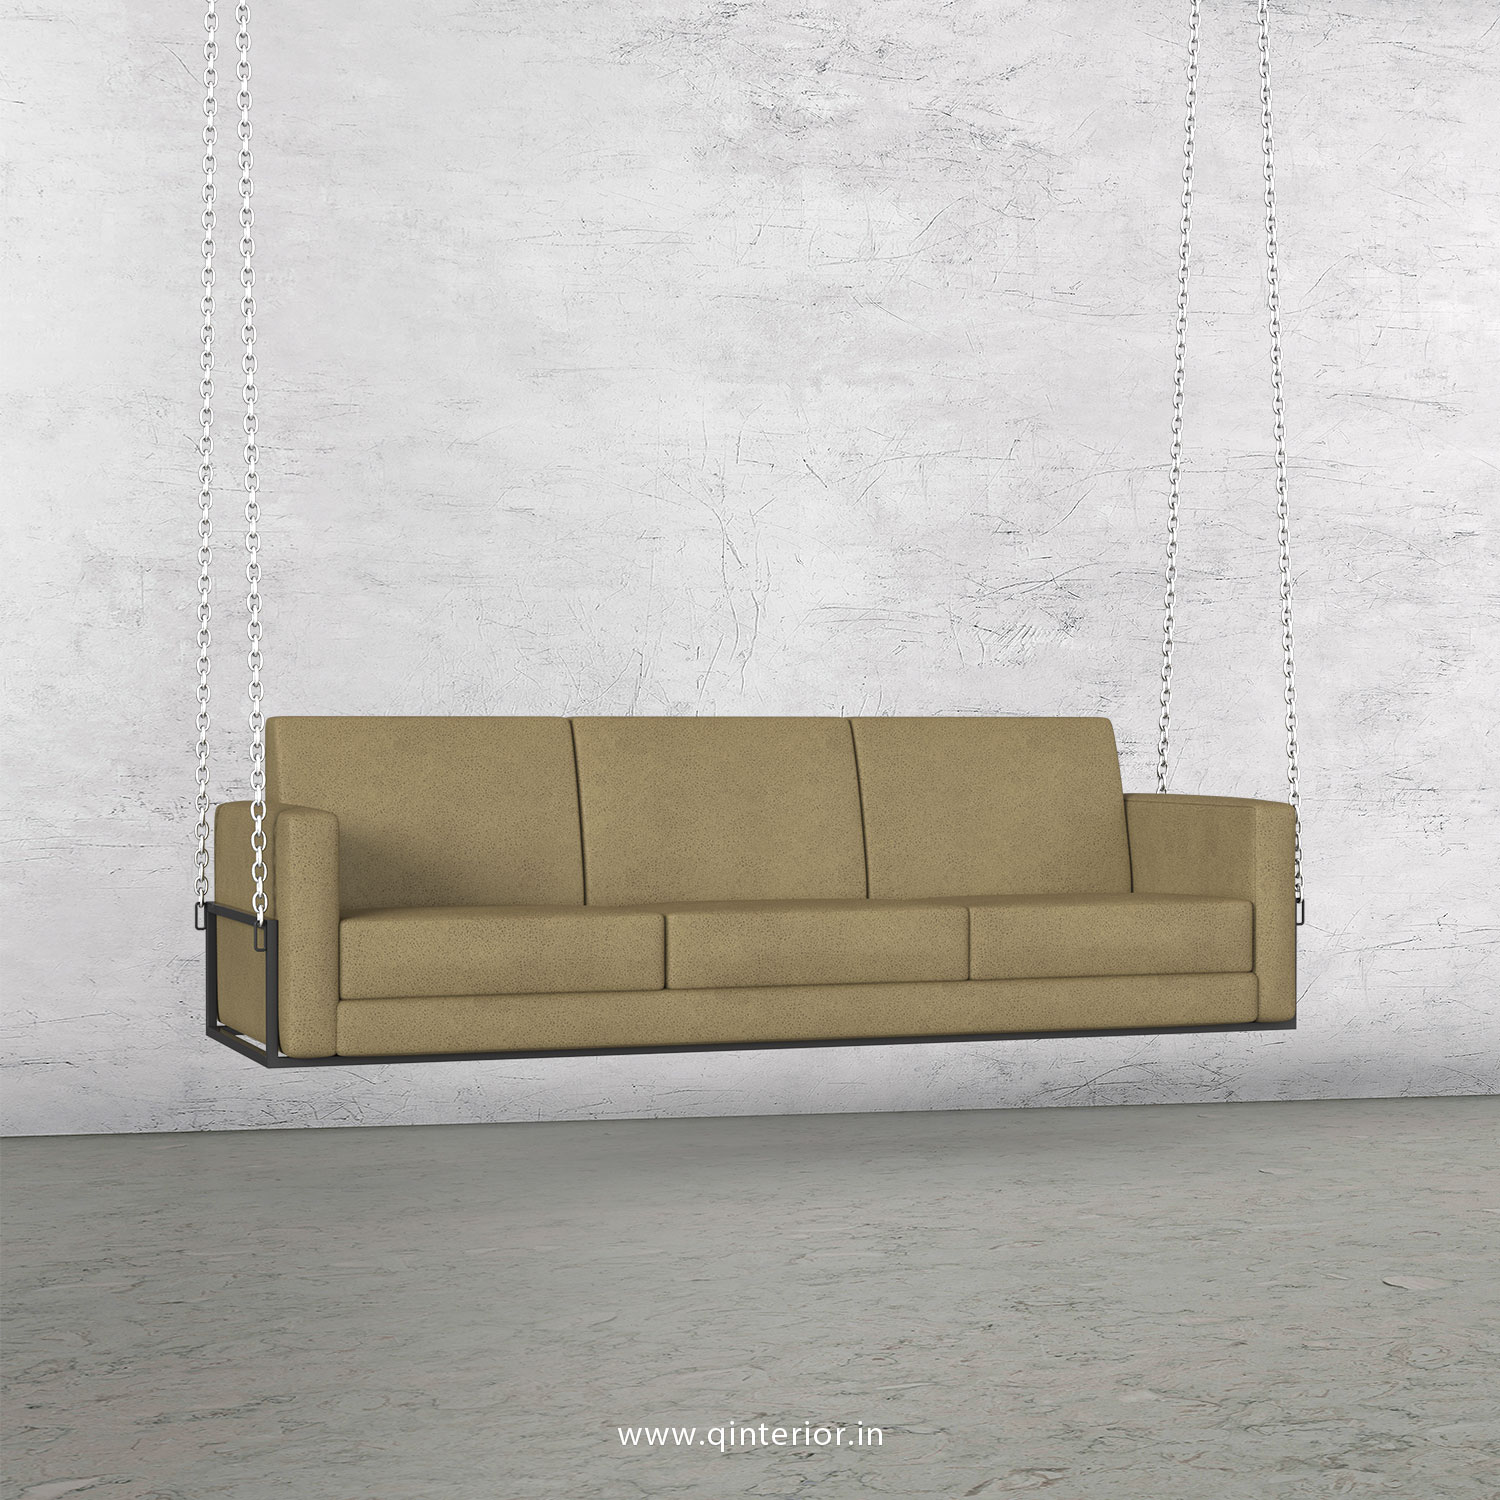 NIRVANA 3 Seater Swing Sofa in Fab Leather Fabric - SSF001 FL01